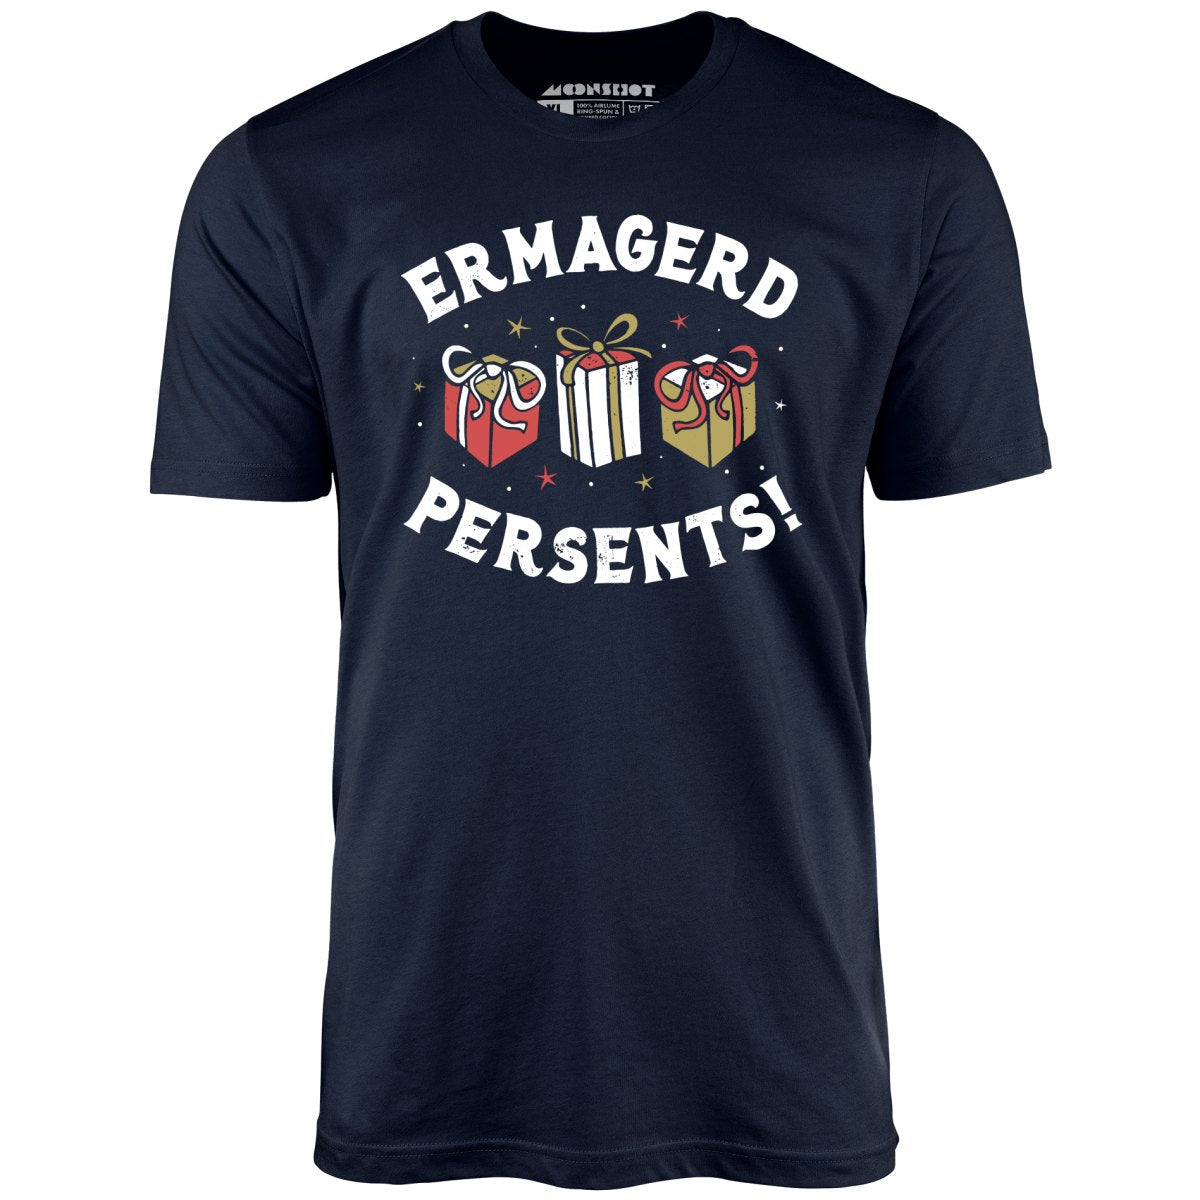 Ermagerd Persents! - Unisex T-Shirt